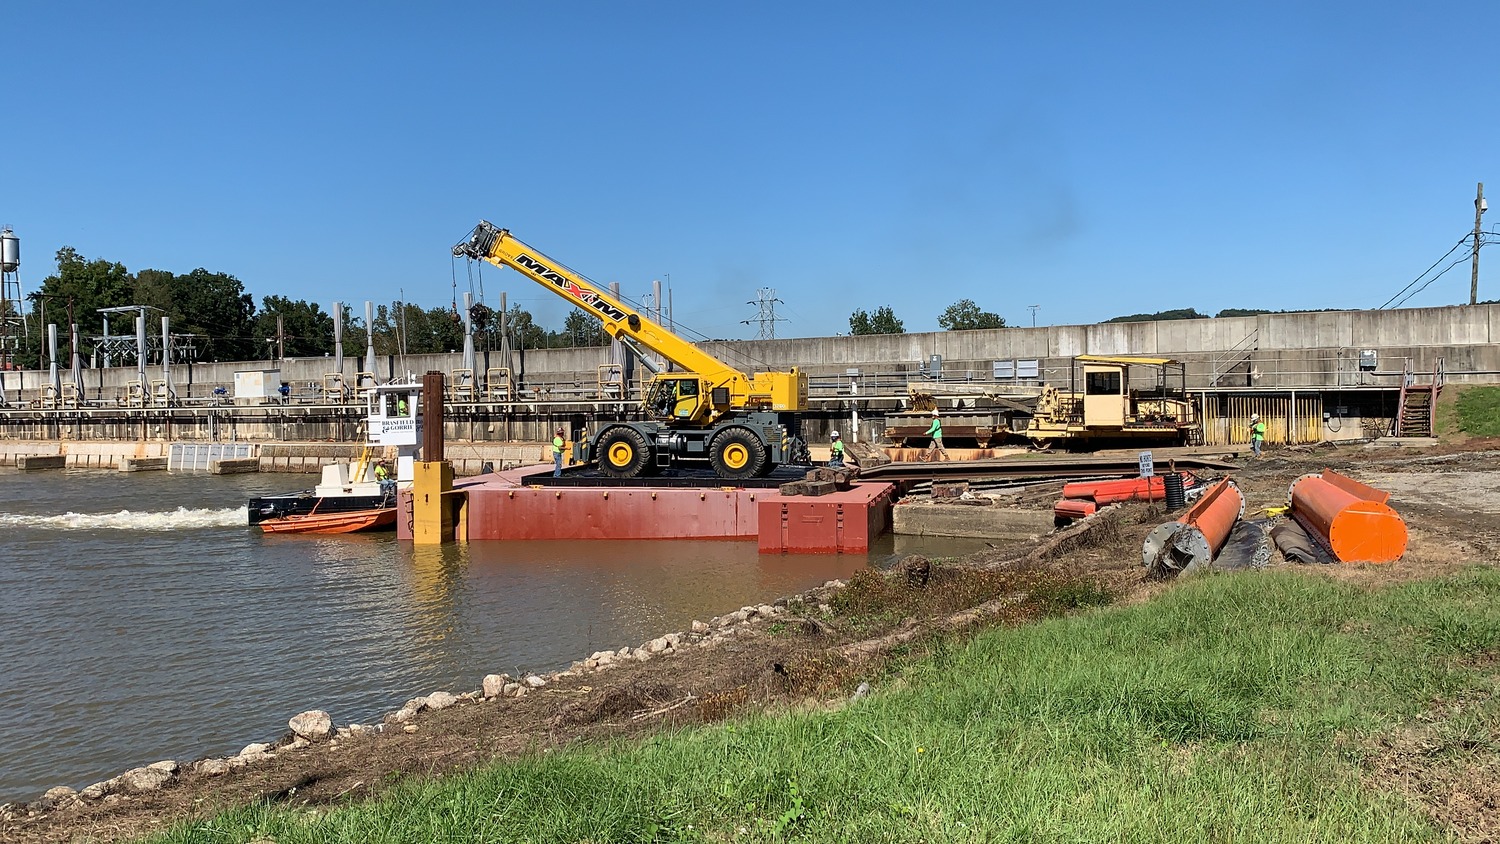 65 Ton Crane on barge